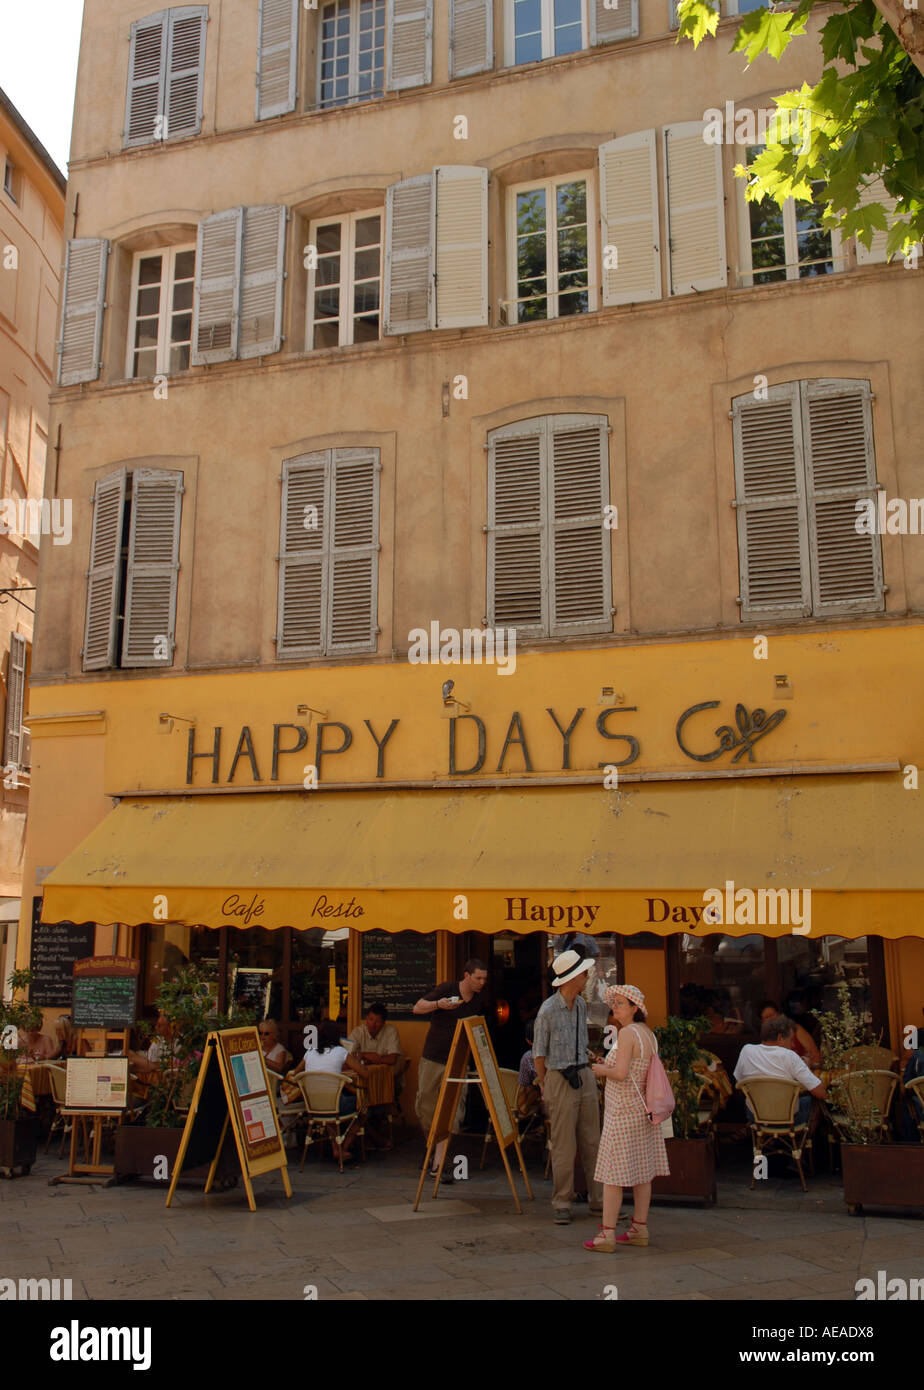 Happy Days cafe, Aix en Provence, France. Stock Photo